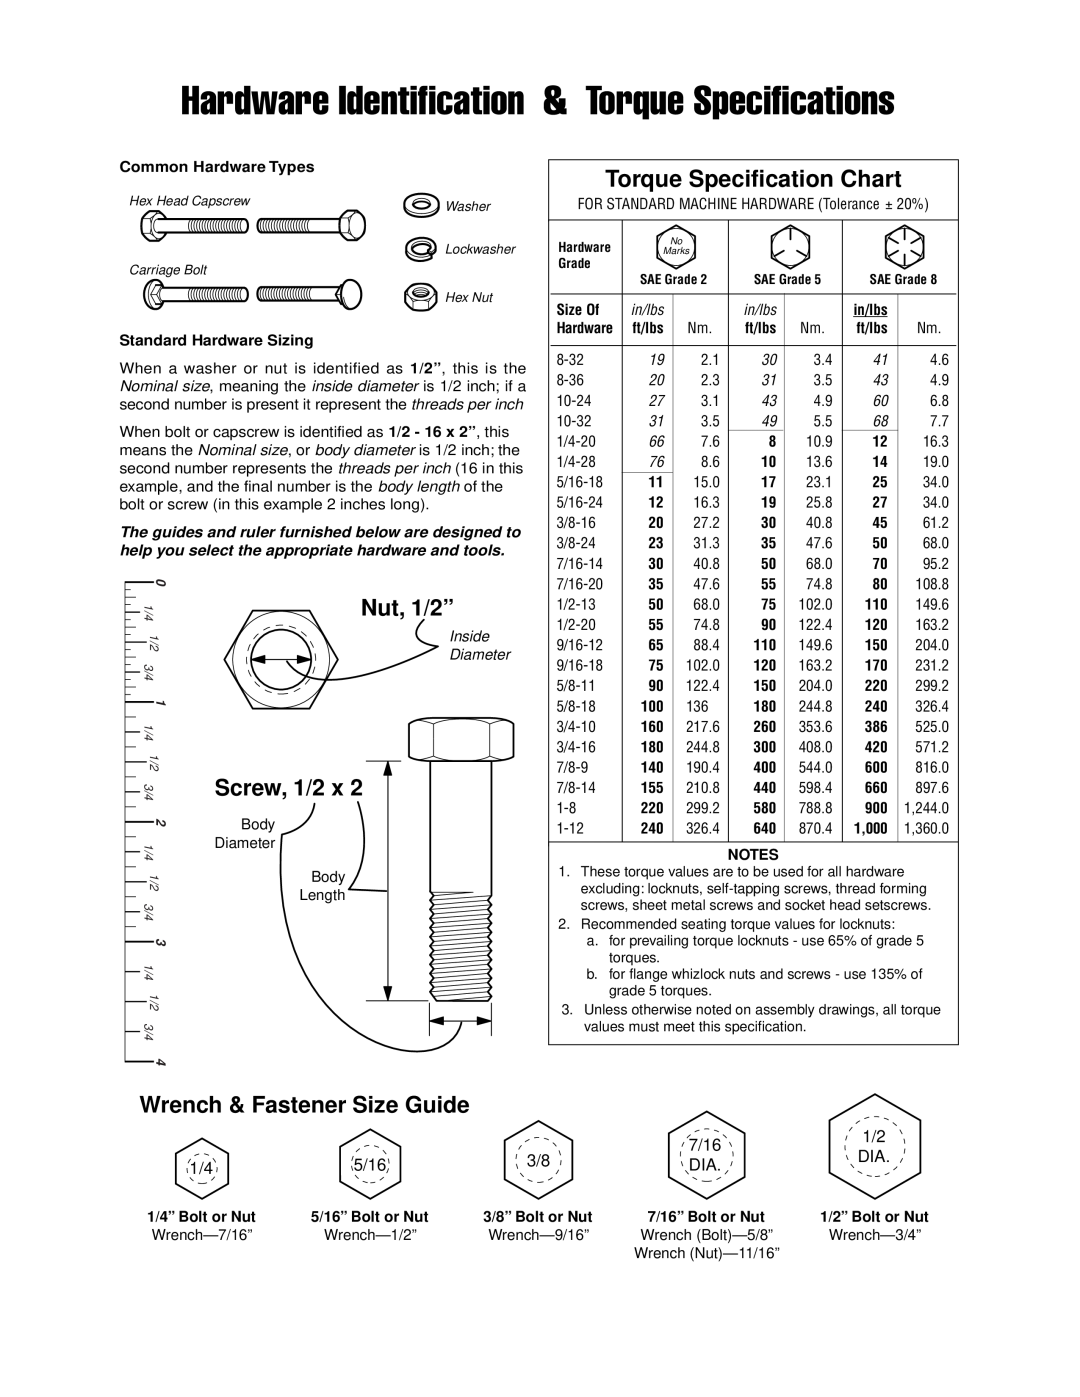 Simplicity 2003 Rapid 7/16, 5/16, Hardware Identification & Torque Specifications, Torque Specification Chart, Nut, 1/2” 